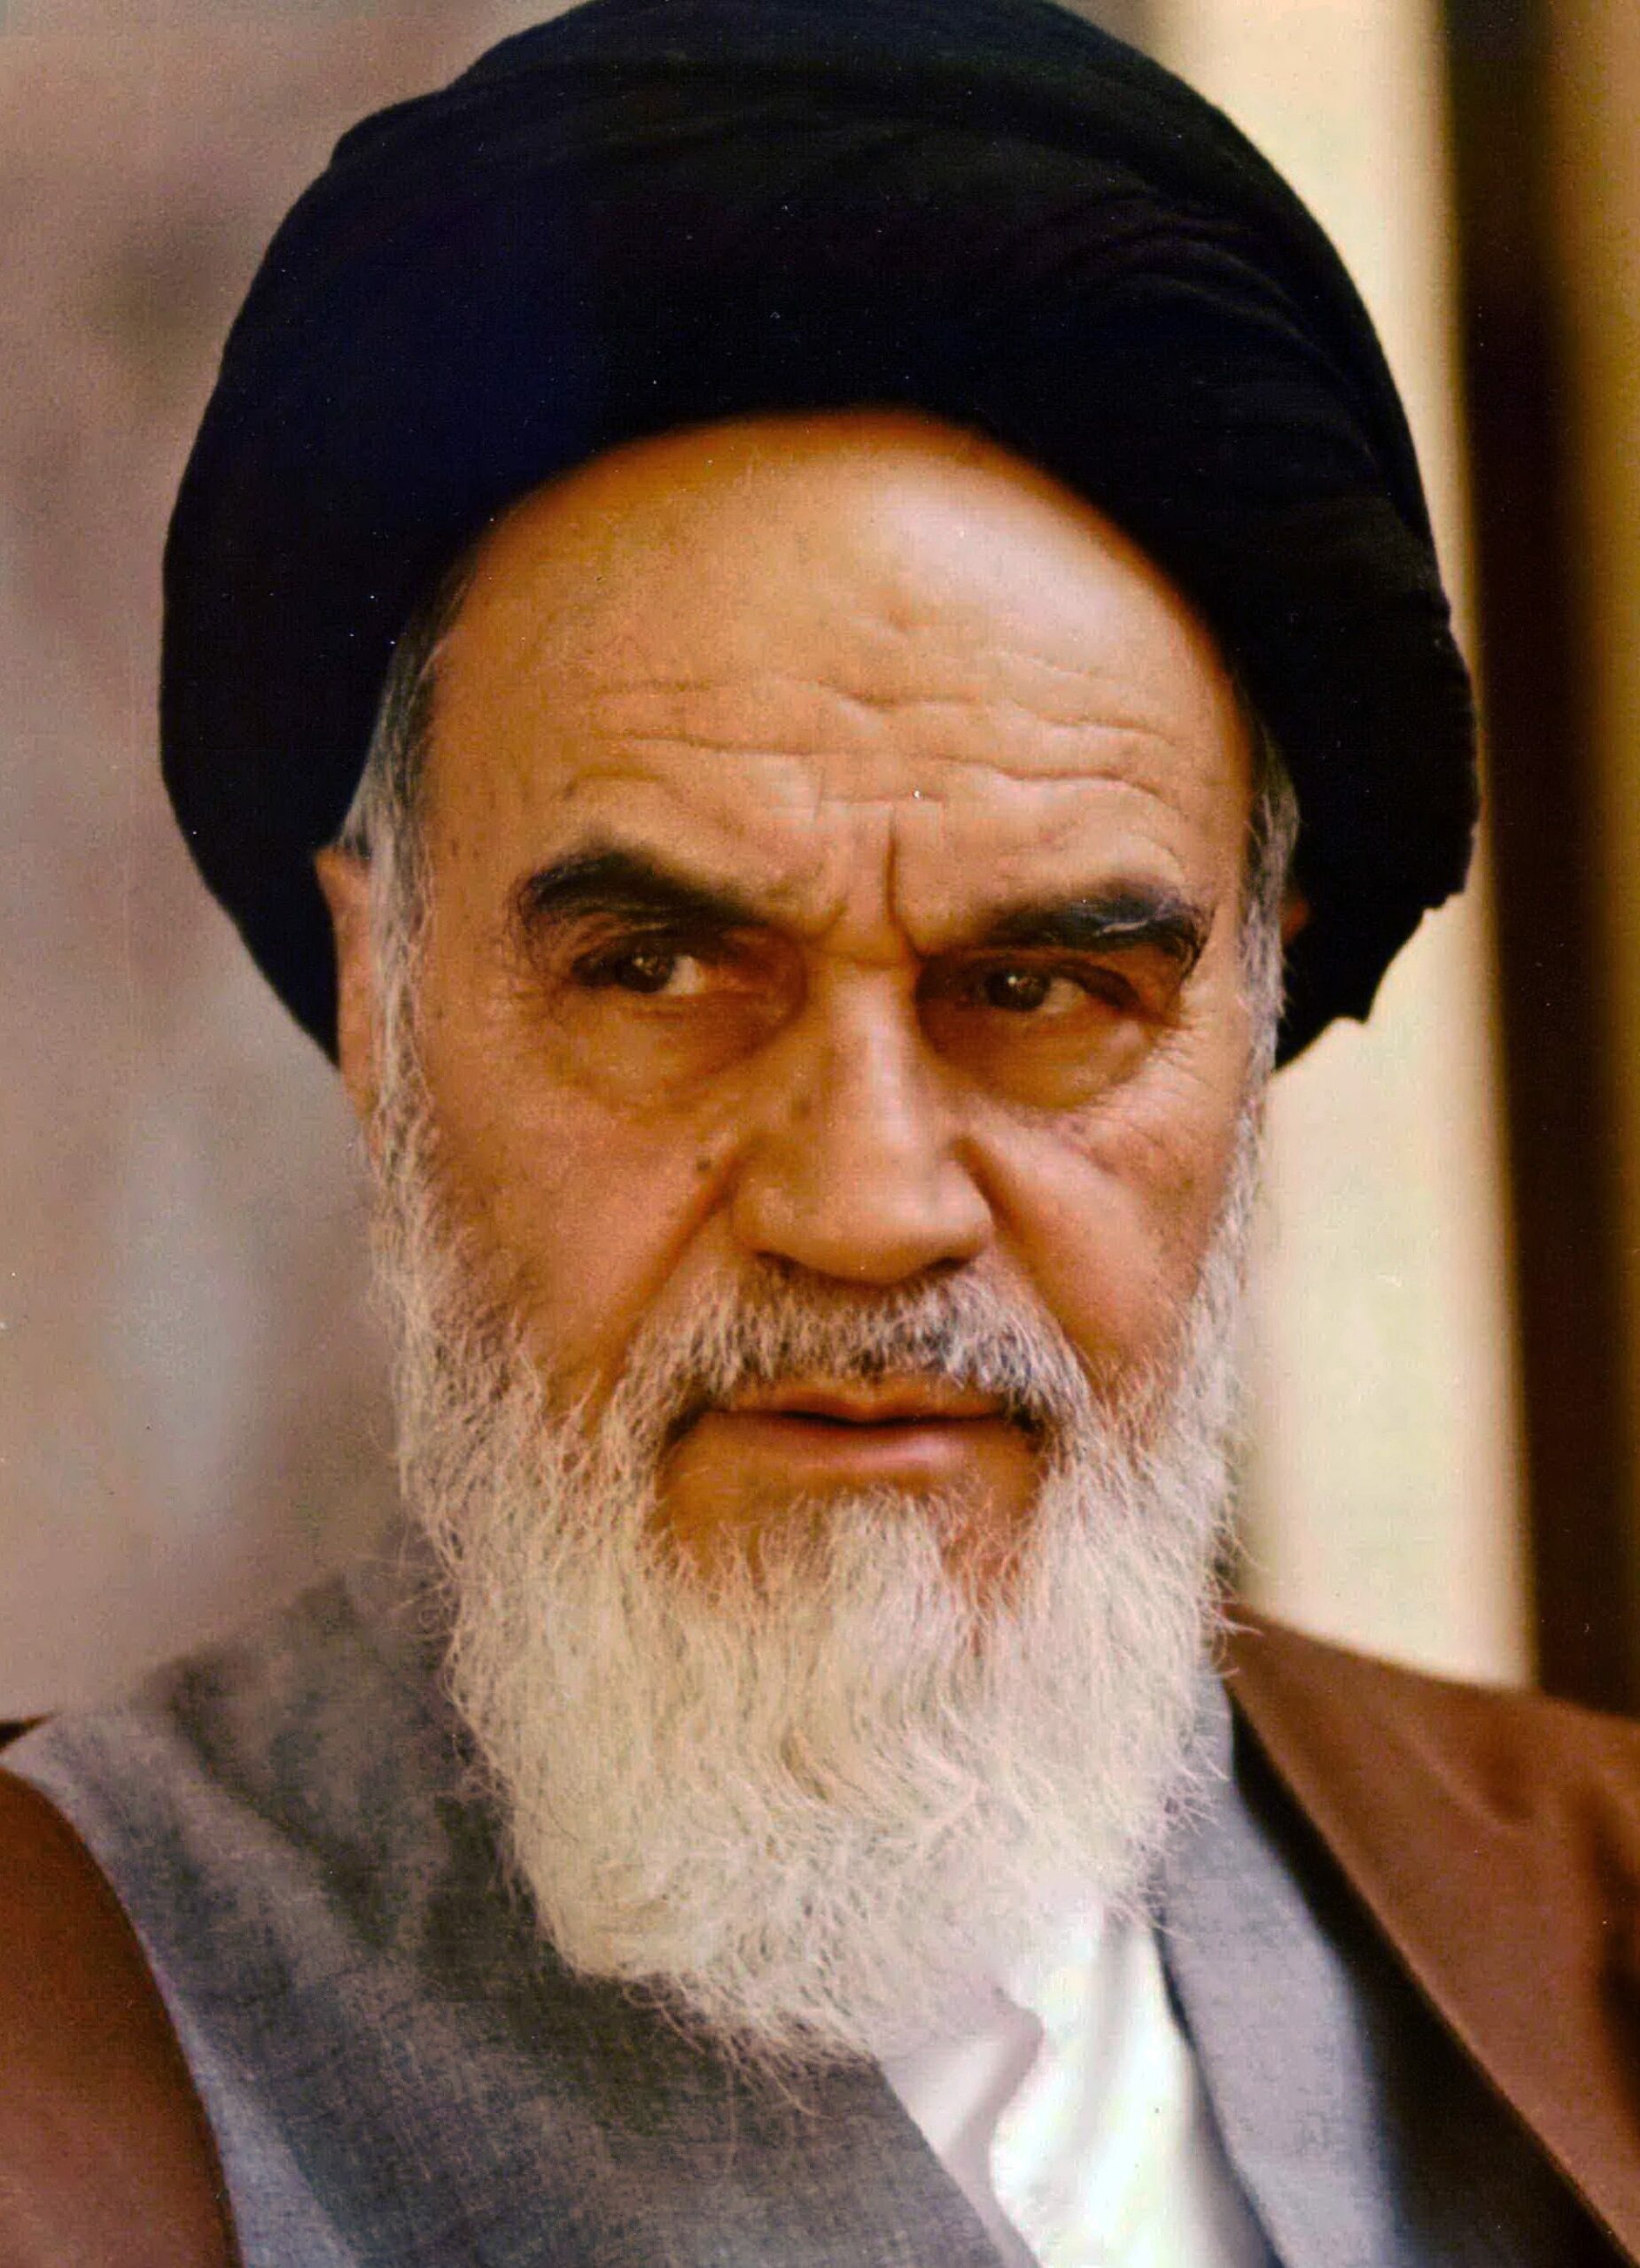 https://www.youtube.com/watch?v=59JM4uDZGiE
İşte dinleyin - Portrait of Ruhollah Khomeini By Mohammad Sayyad ayetullah humeyni scaled